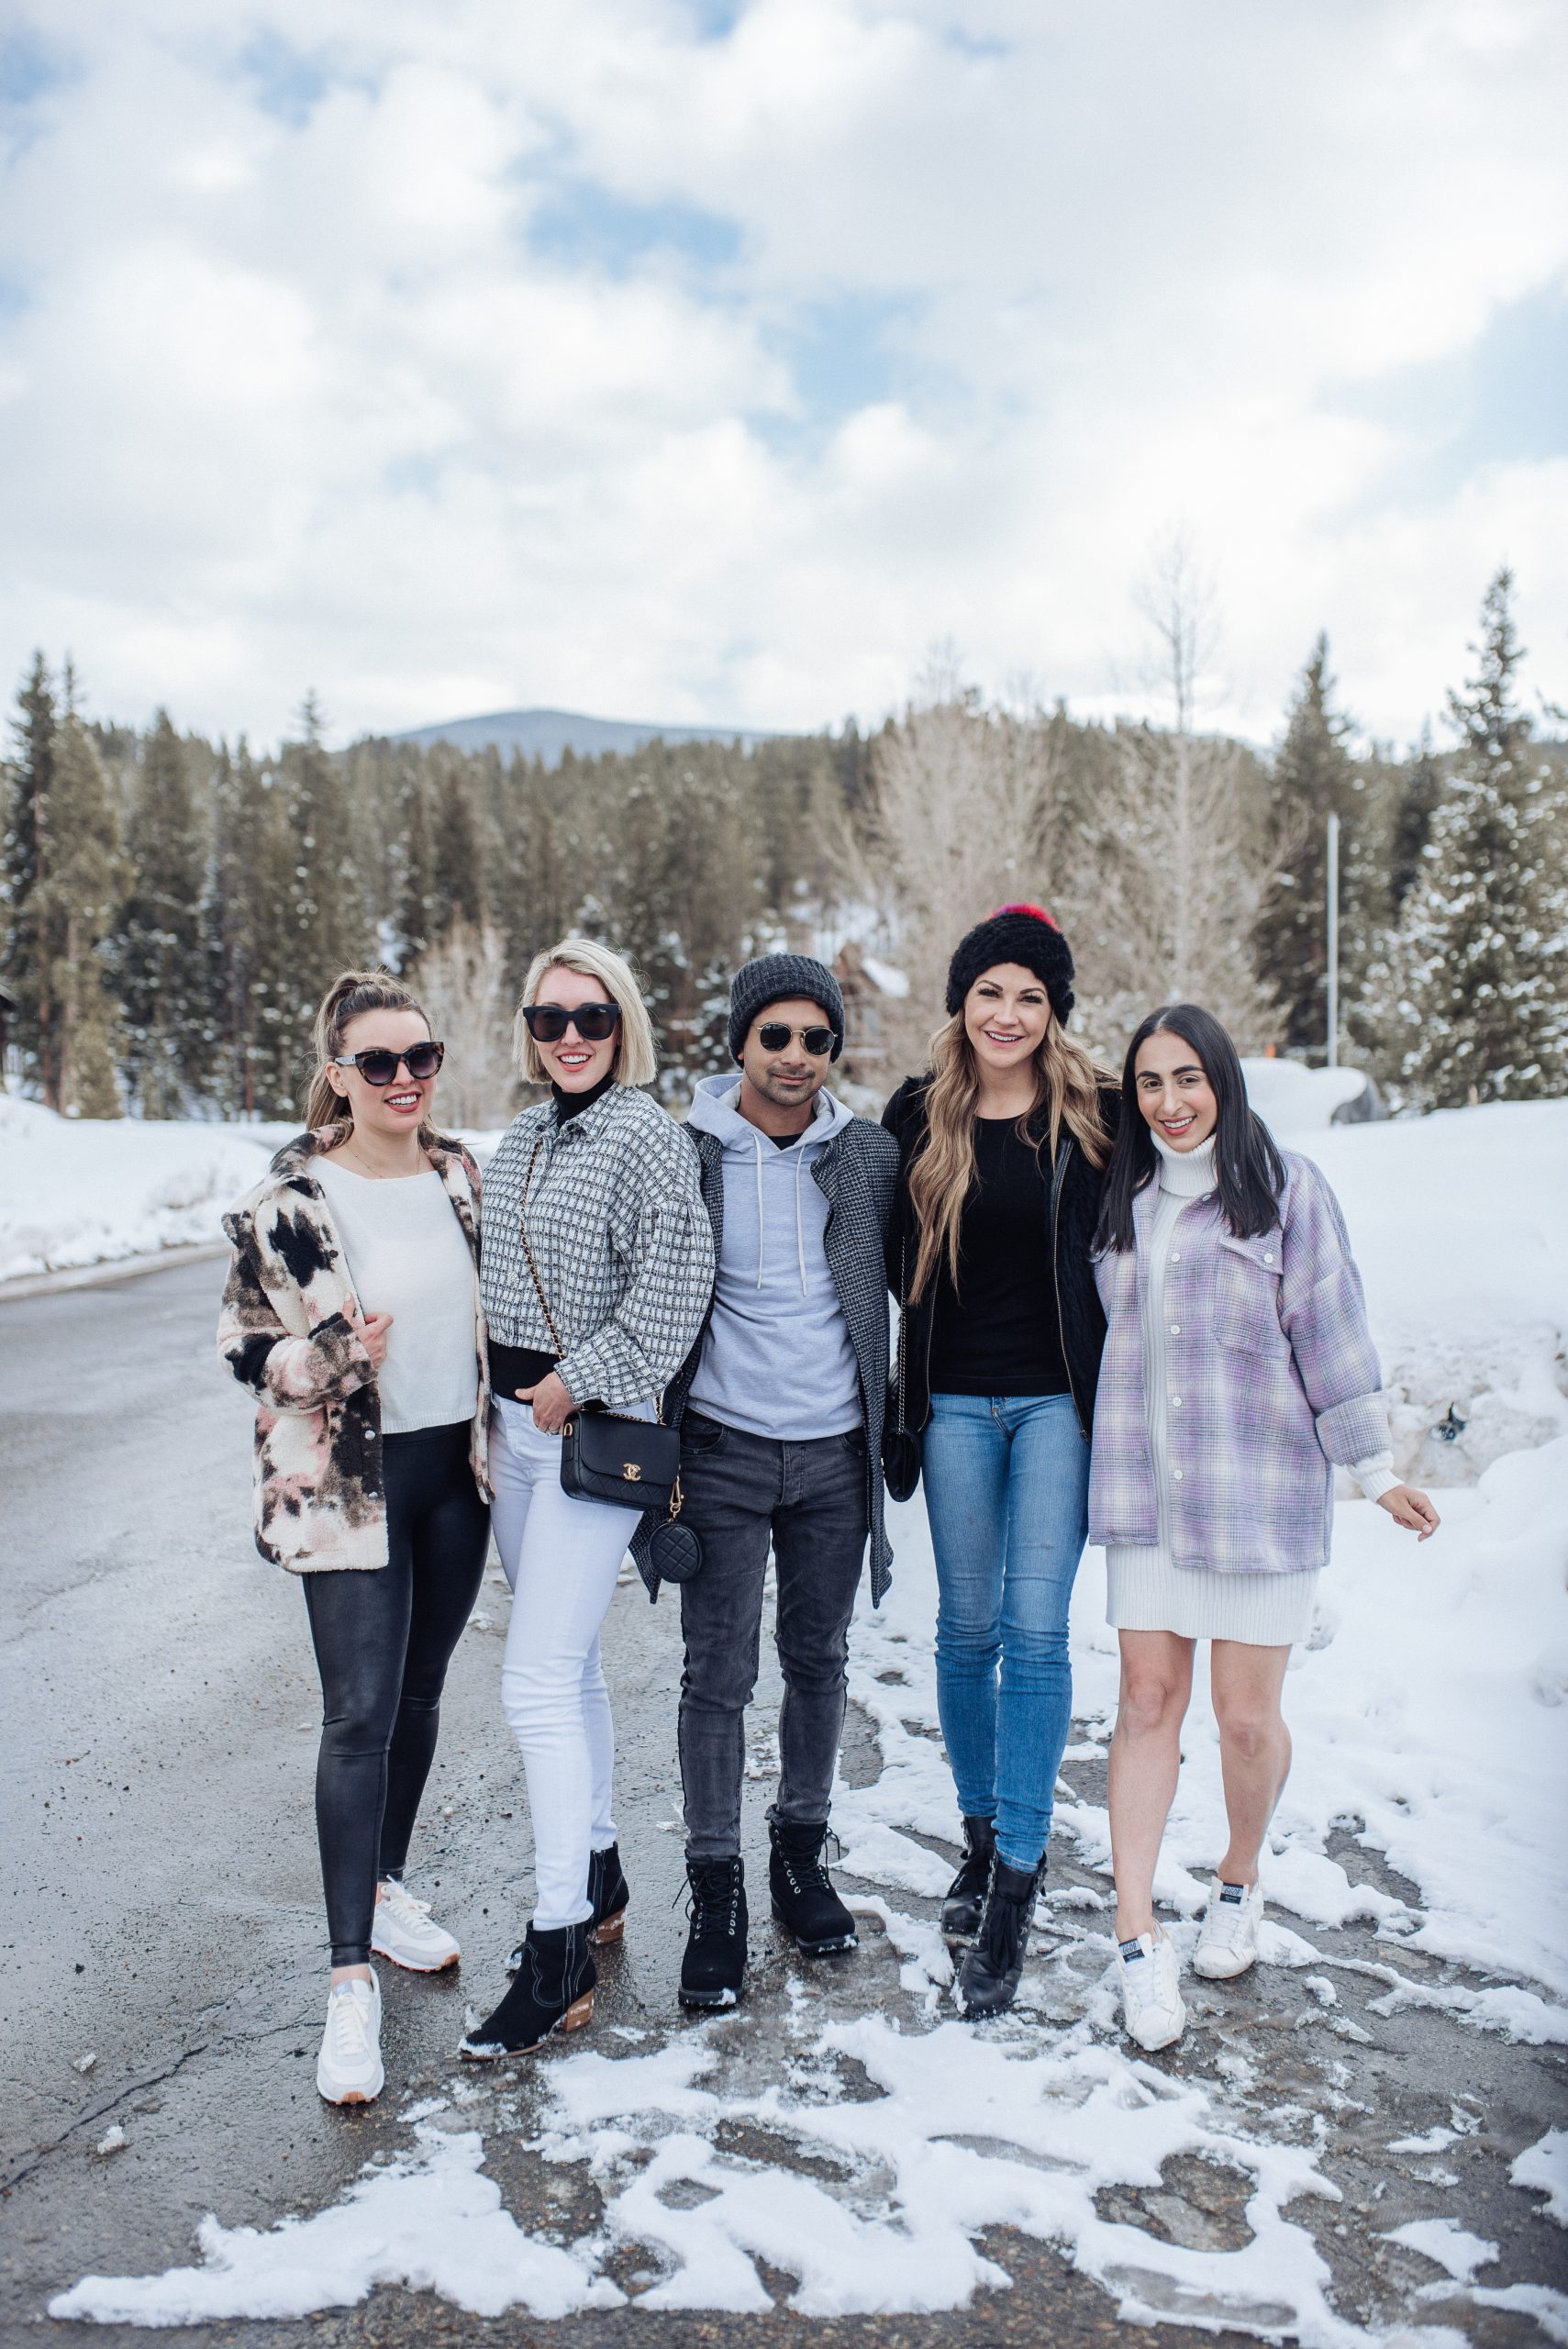 Breckenridge, CO with my friends!  #mensfashion #breckenridge #colorado #skitrip #ski #snow #winter #vacation #winterbreak #travel